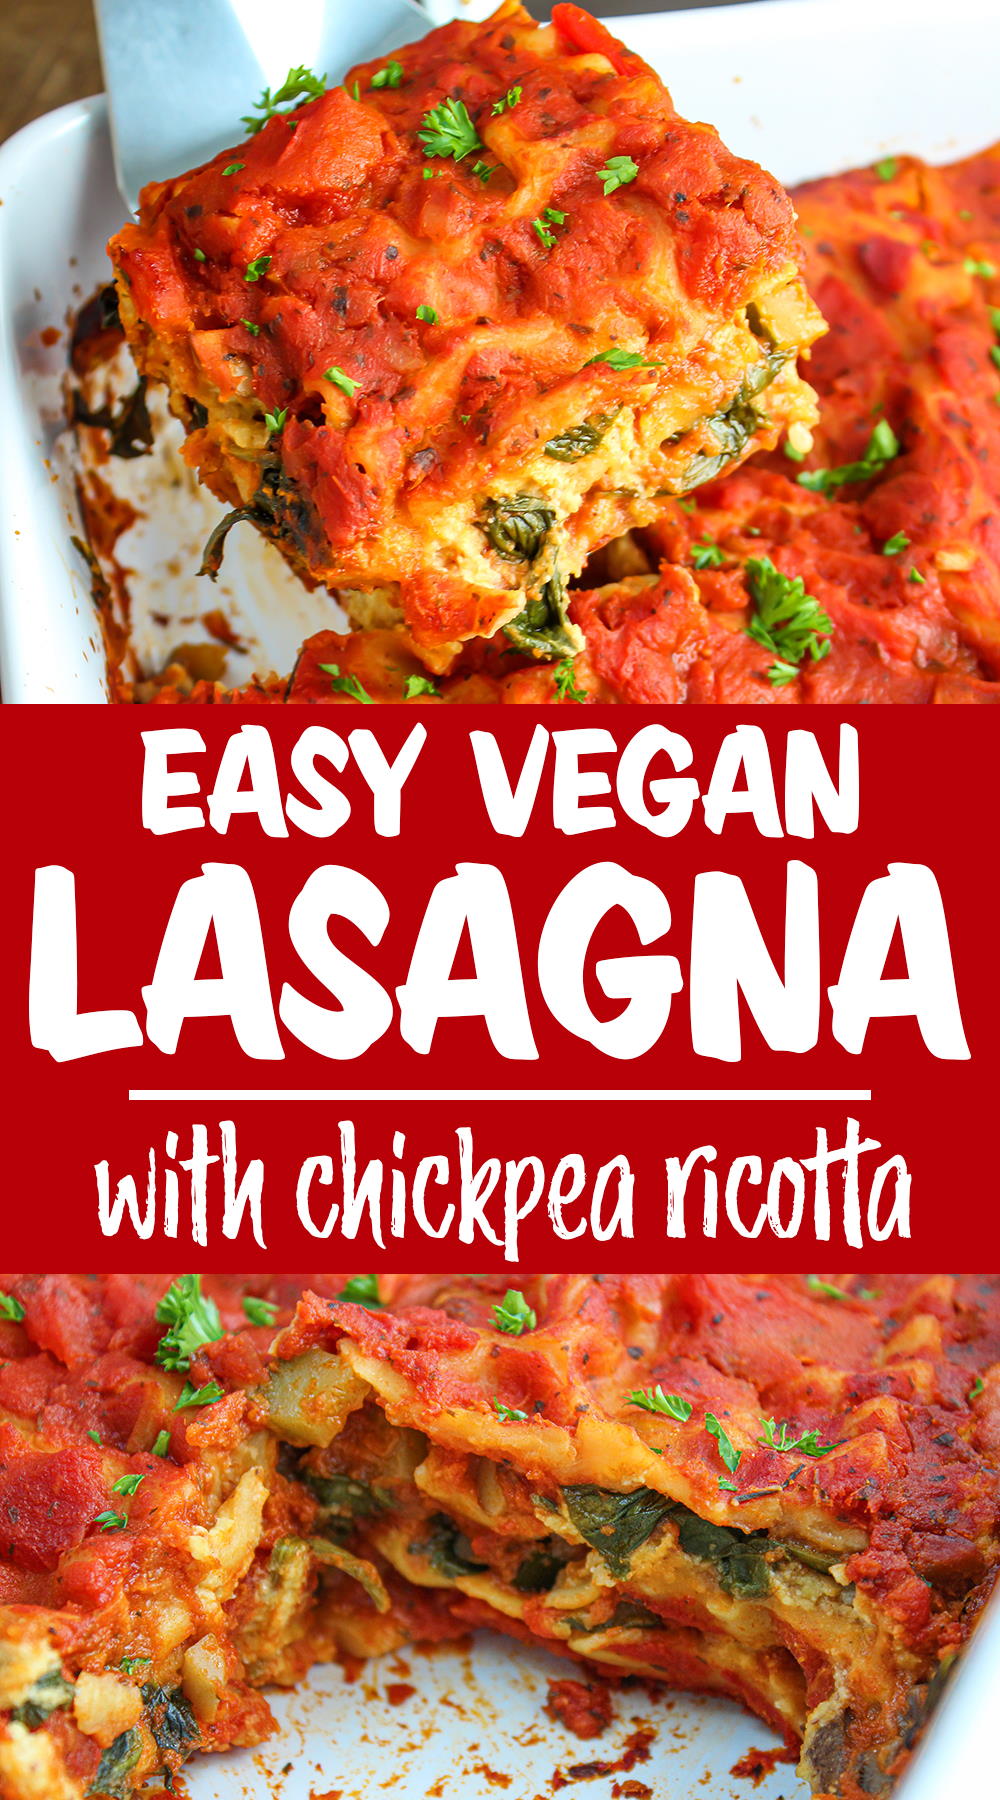 Easy Vegan Lasagna with Chickpea Ricotta - The Garden Grazer